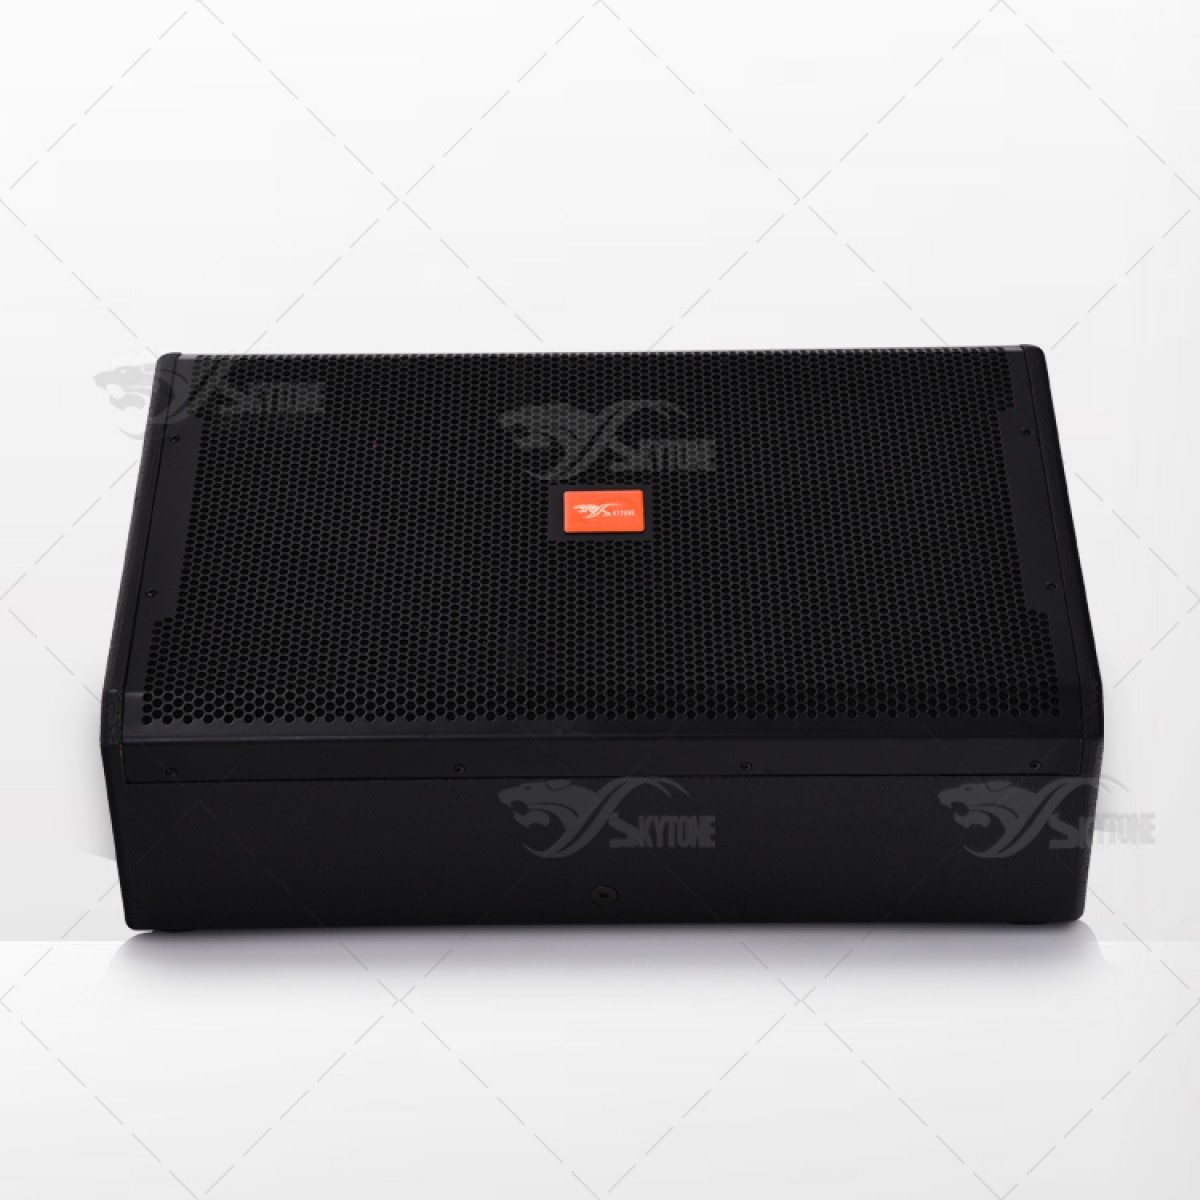 VRX915M single 15inch stage monitor, 15 inch monitor speaker